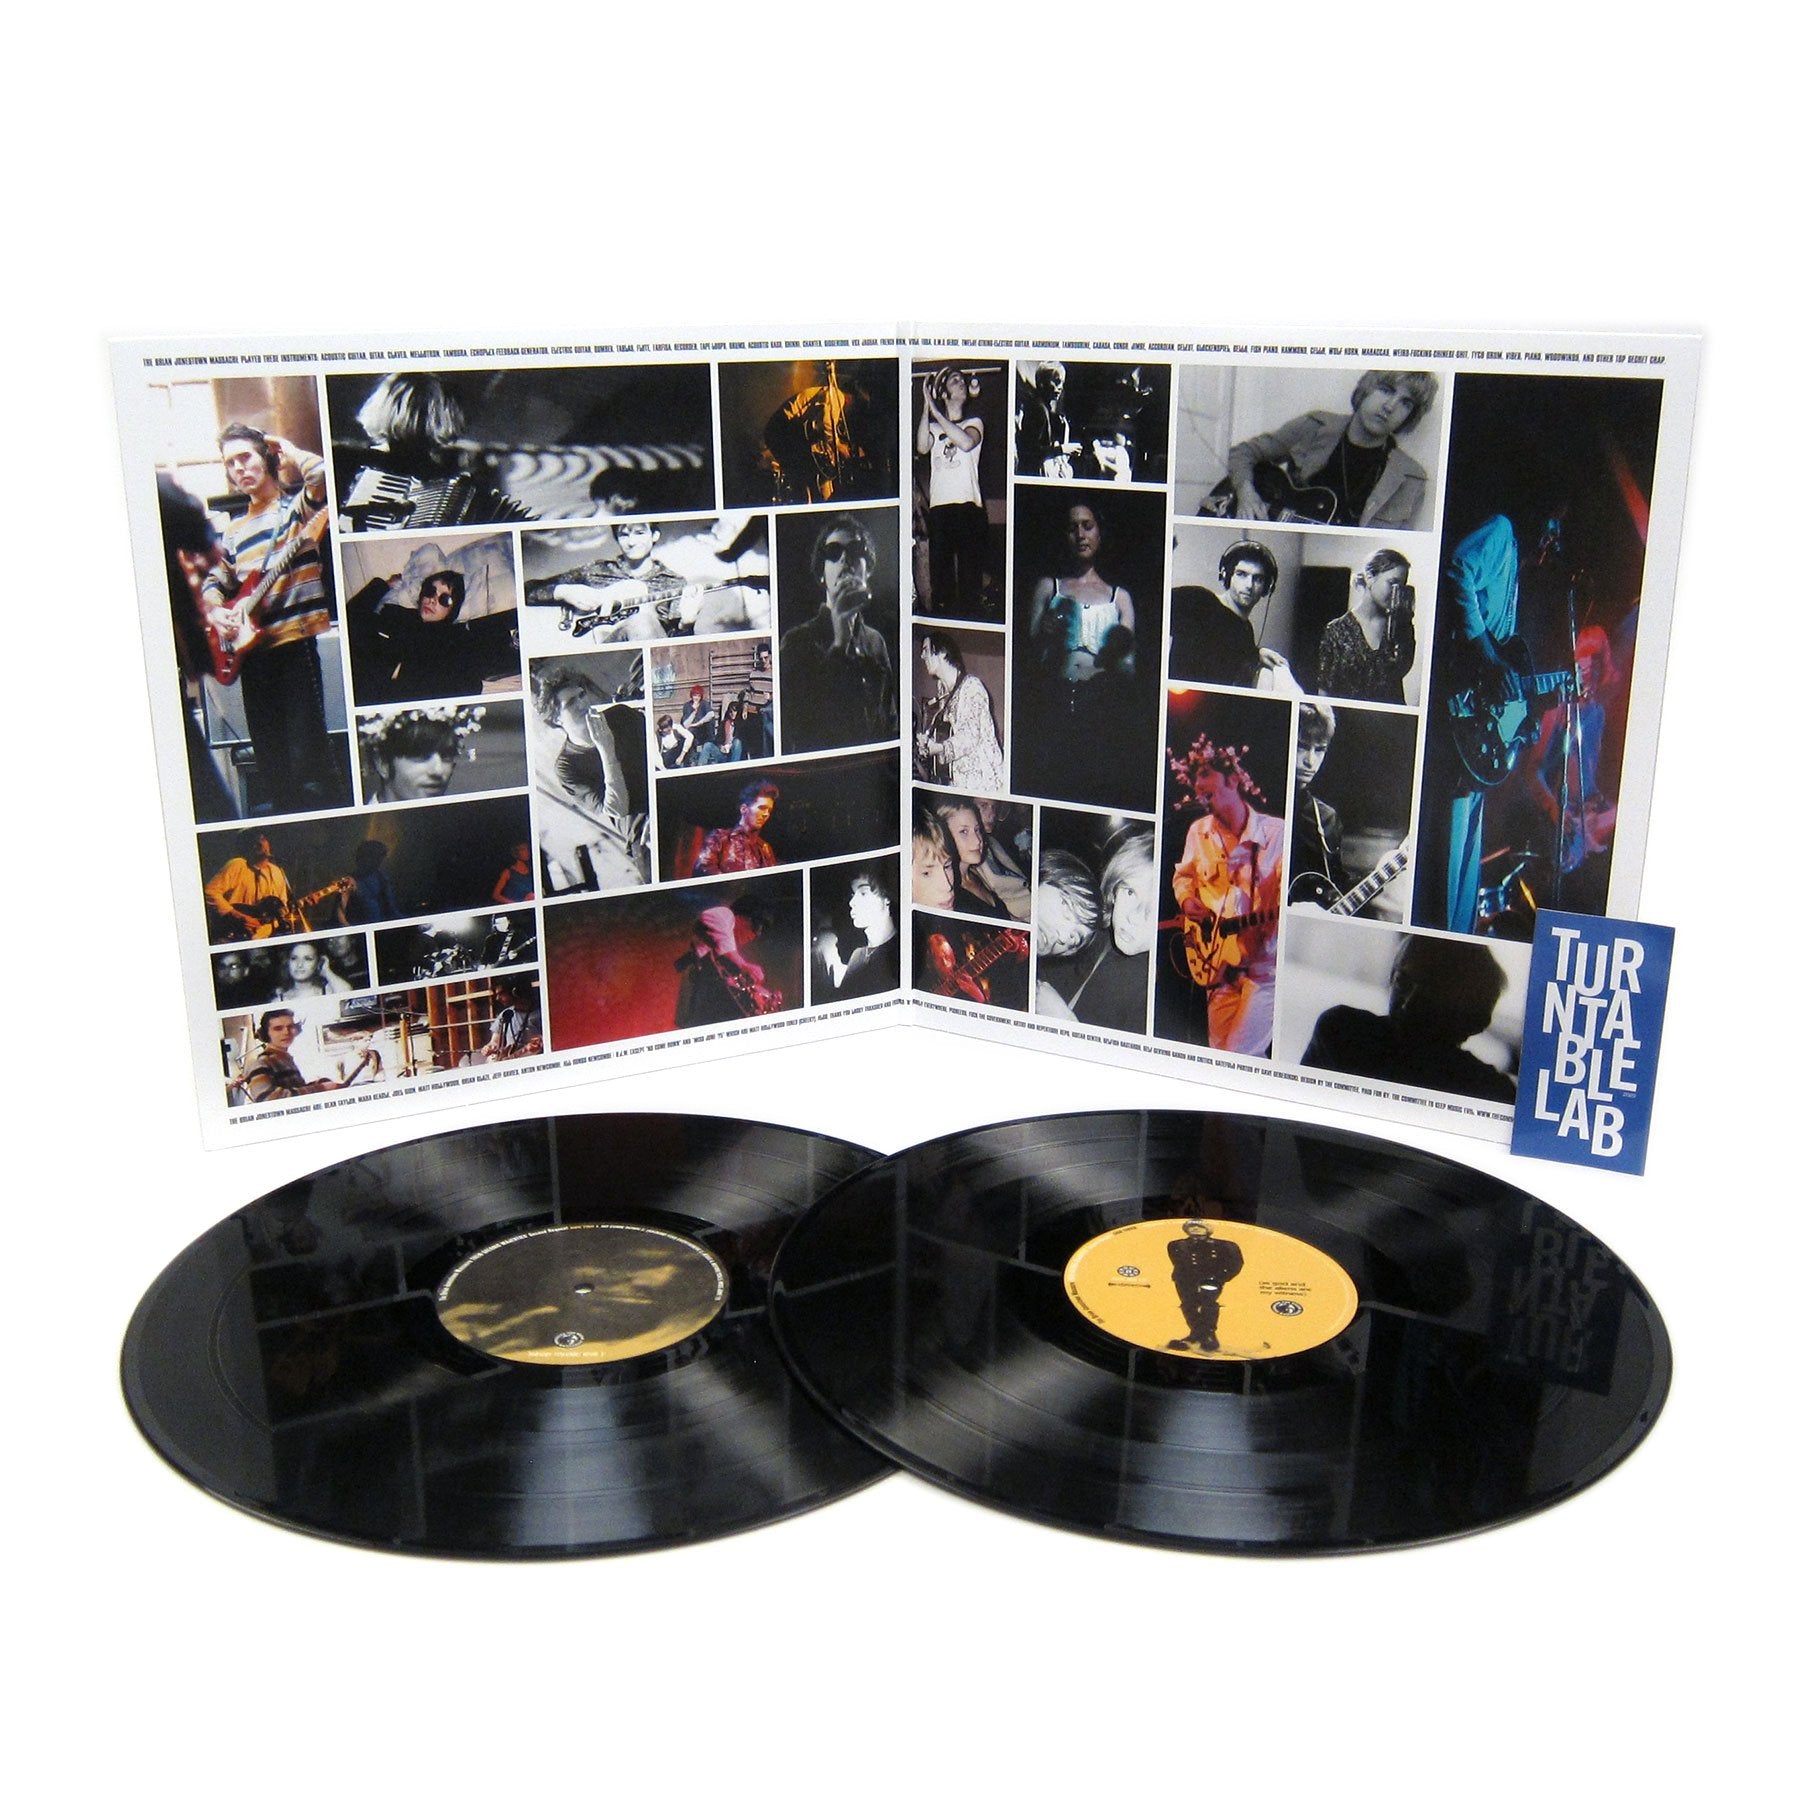 Brian Jonestown Massacre: Their Satanic Majesties Second Request (180g) Vinyl